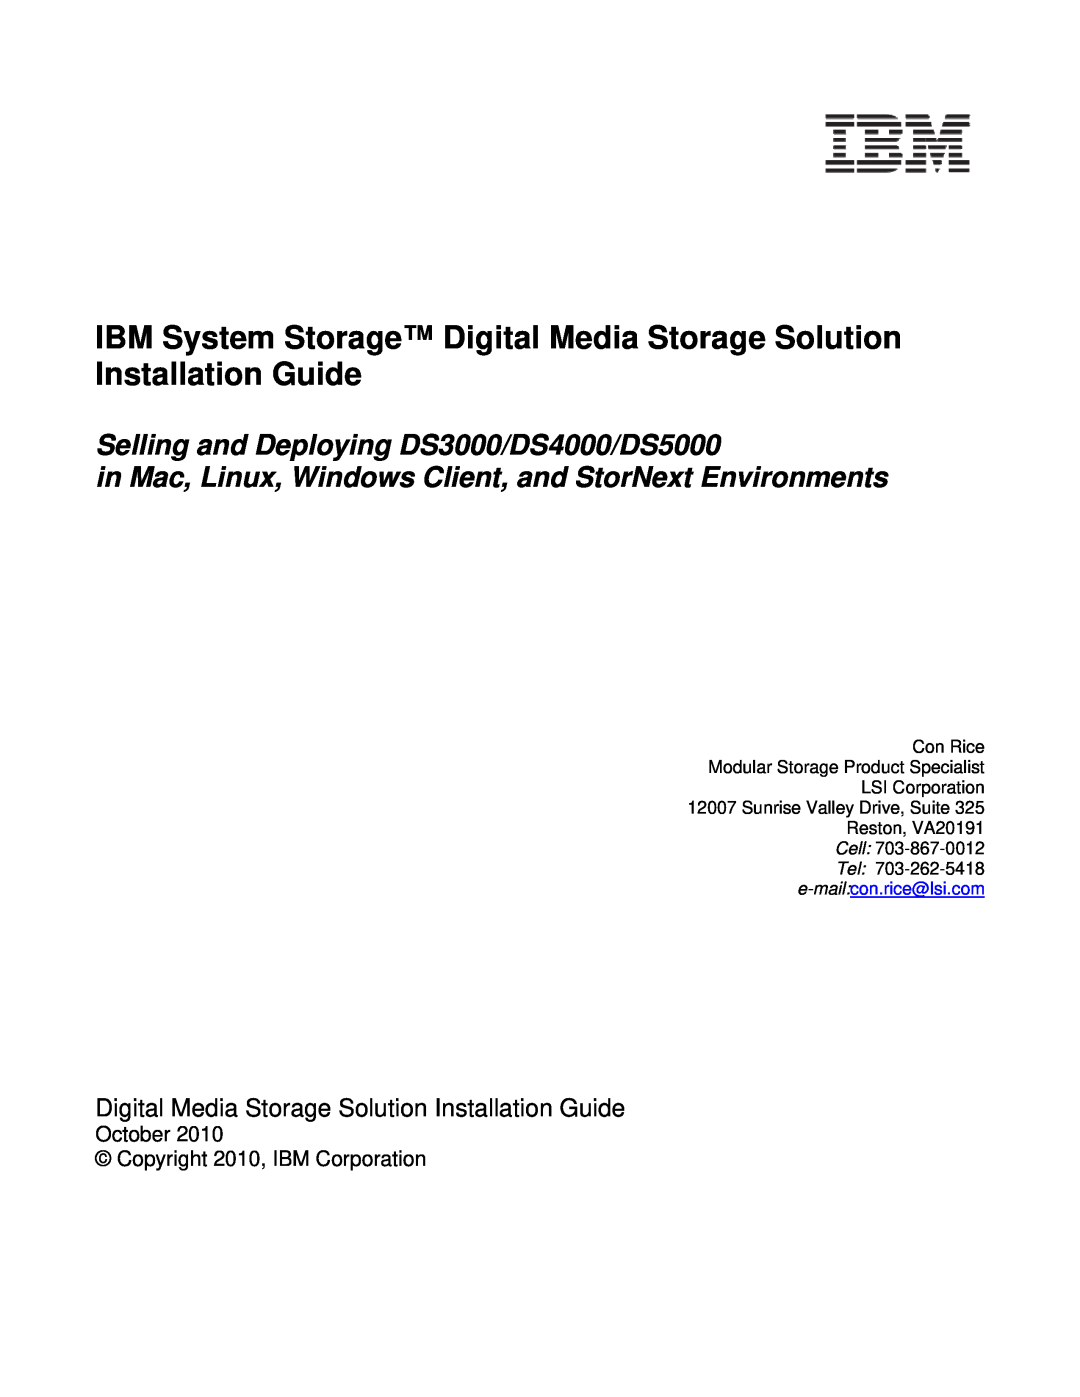 IBM DS5000, DS3000 manual IBM System Storage Digital Media Storage Solution Installation Guide, e-mail con.rice@lsi.com 